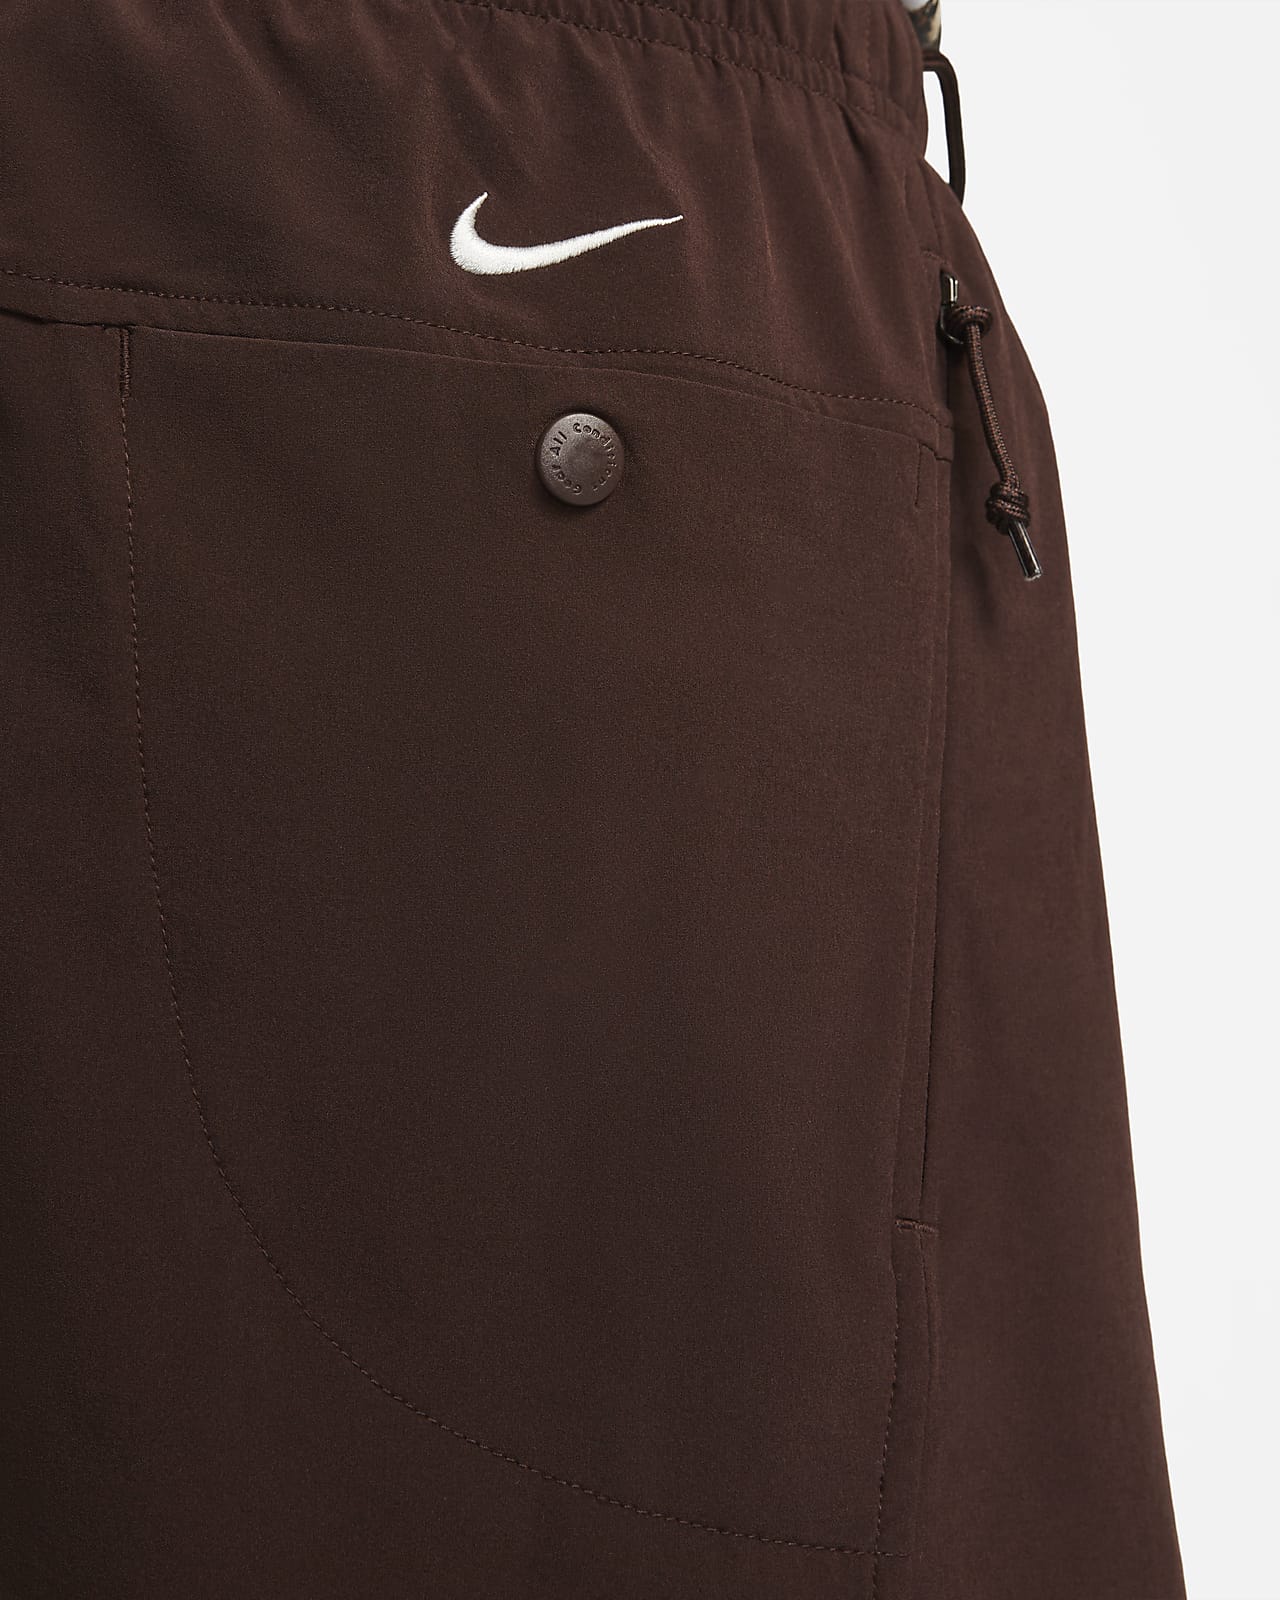 Nike ACG Dri-FIT 'New Sands' Men's Shorts